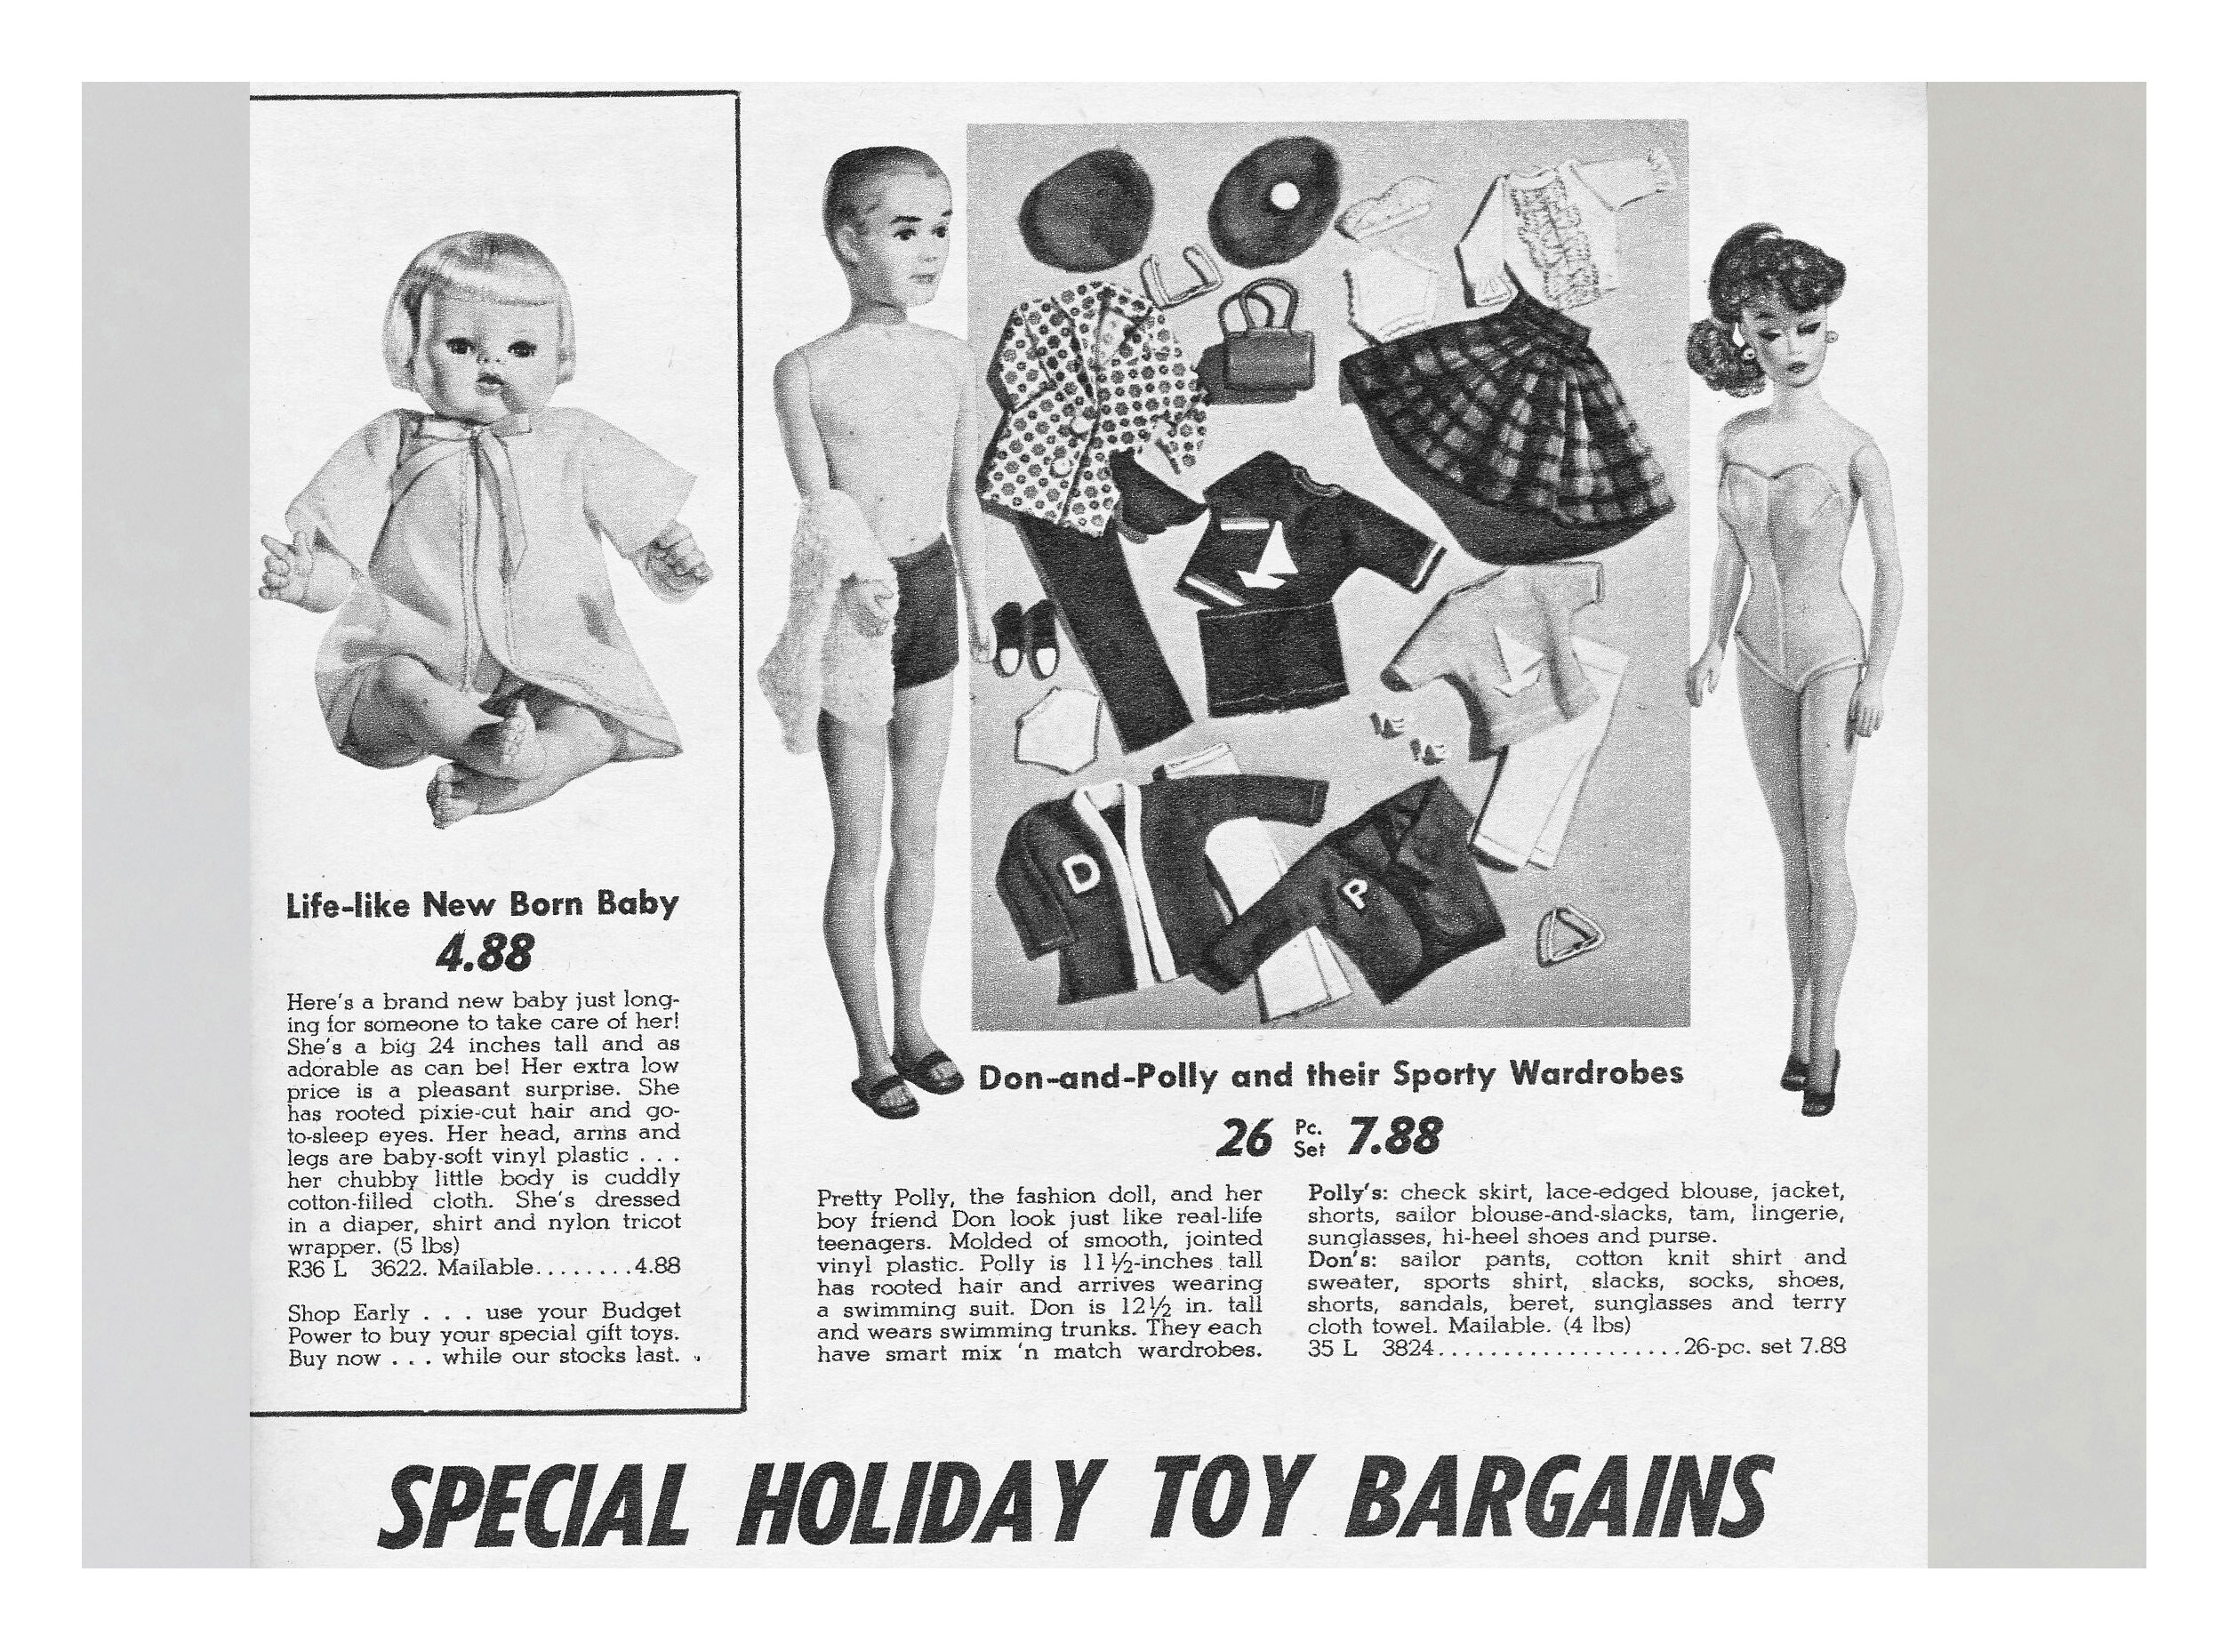 From 1962 Spiegel Winter Sale catalogue